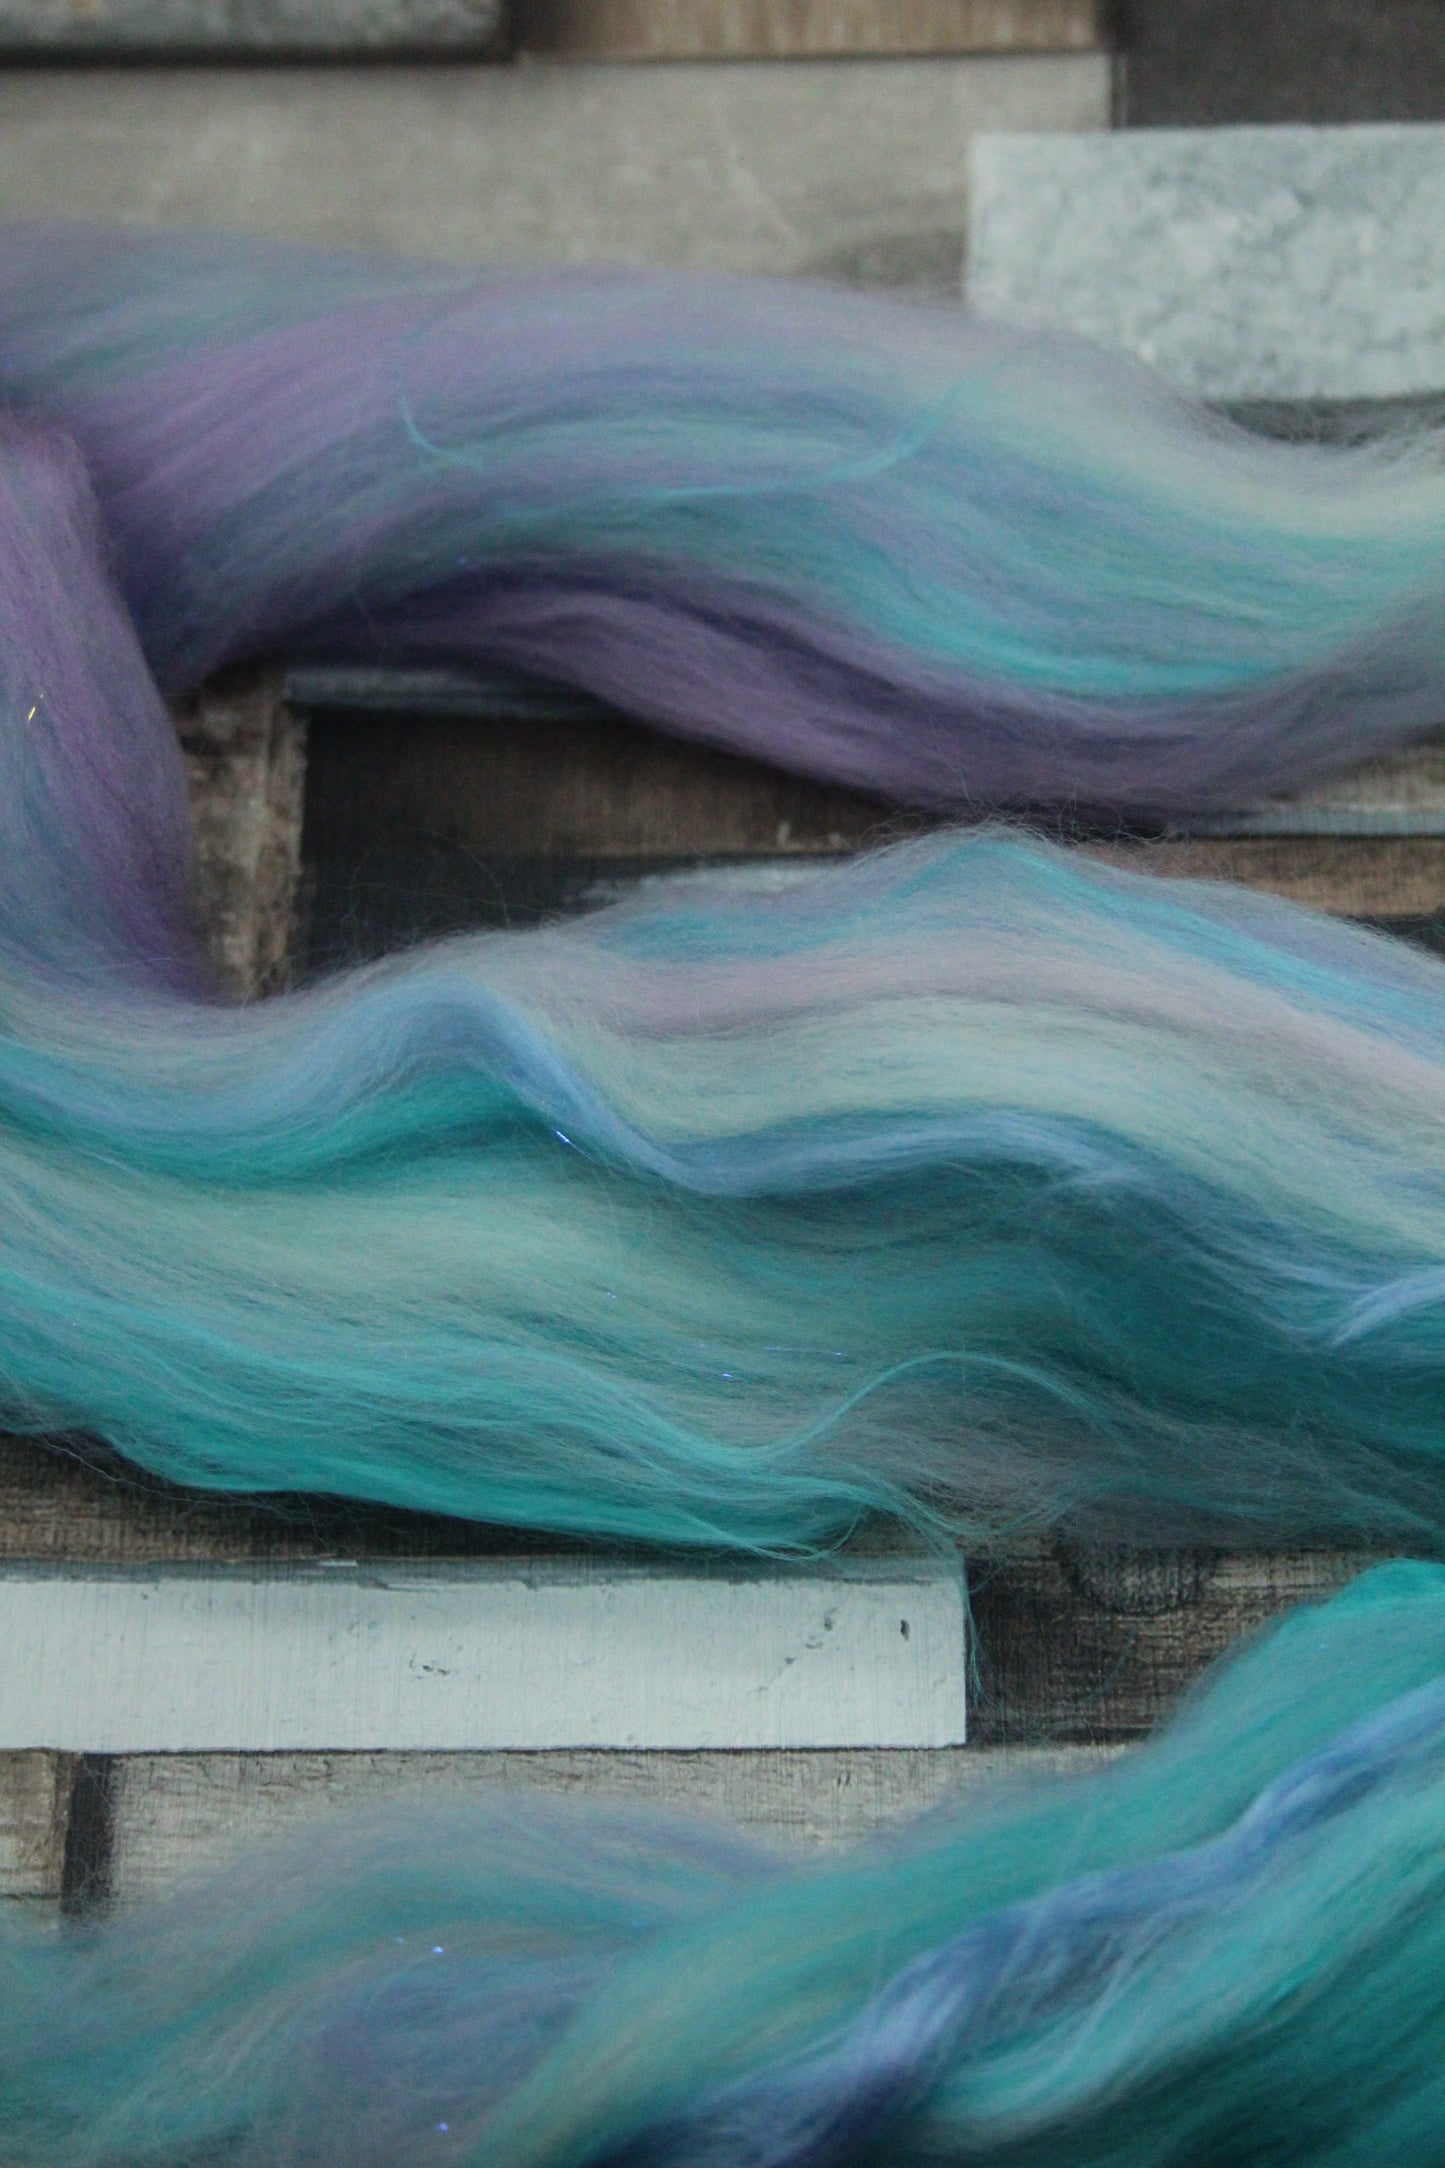 Merino Wool Blend - Purple Blue Pink - 12 grams / 0.4 oz  - Fibre for felting, weaving or spinning